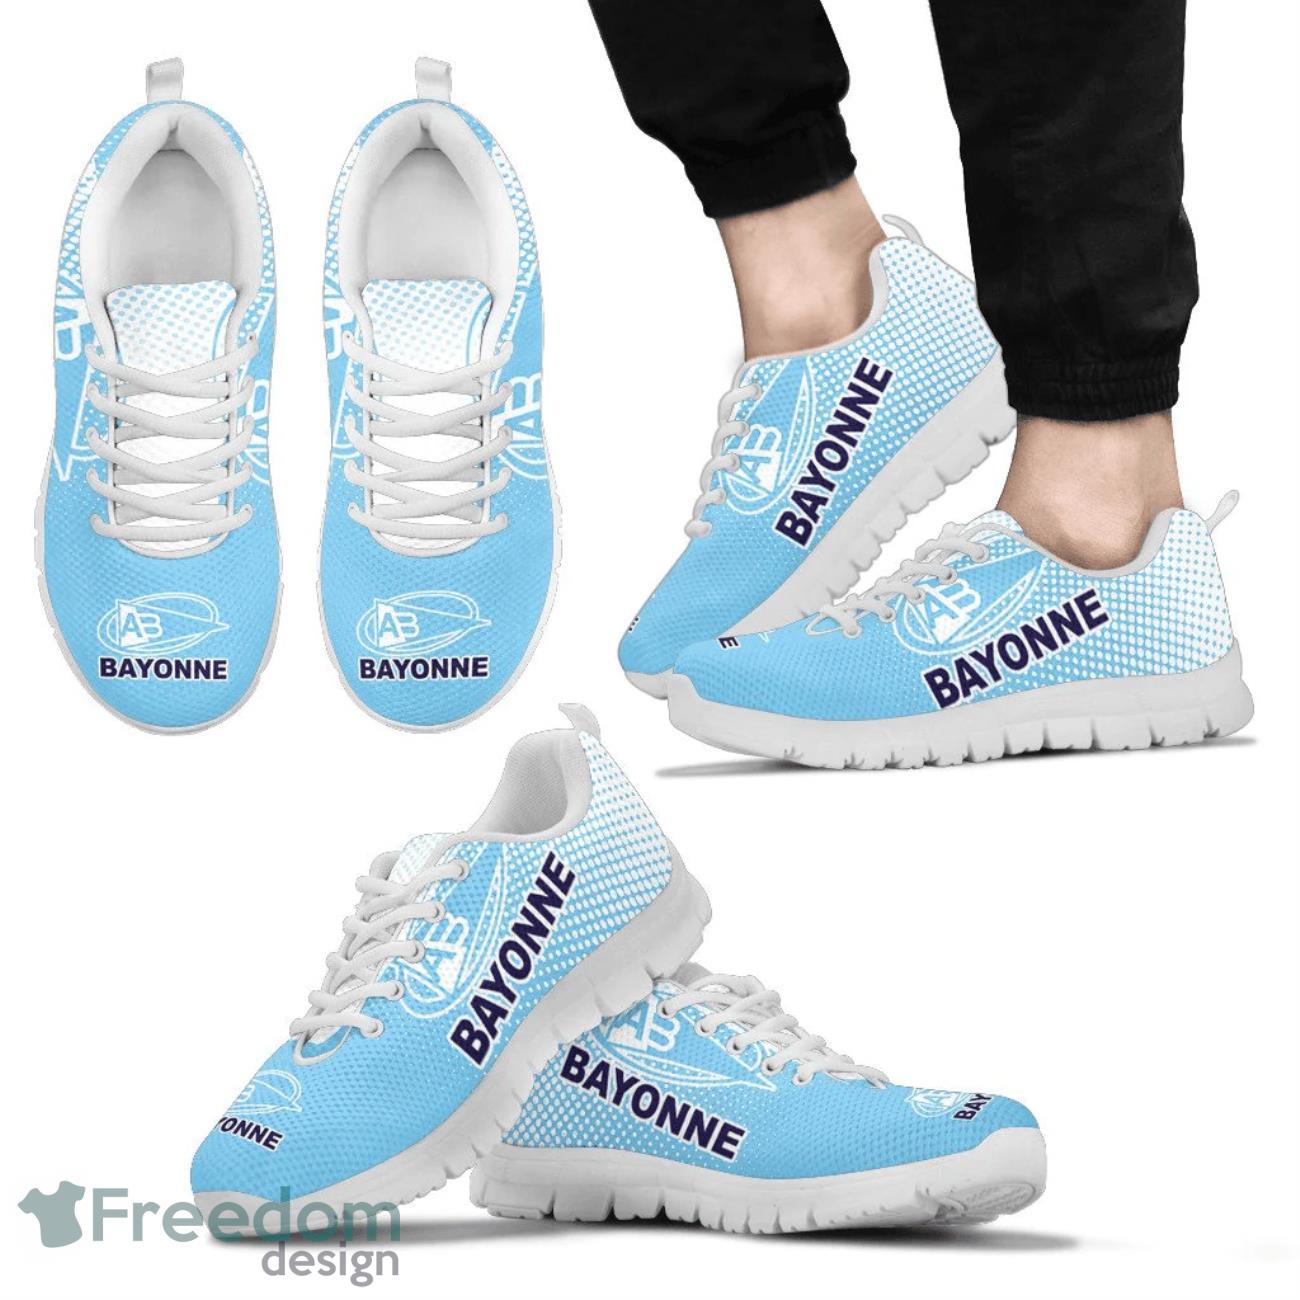 Aviron Bayonnais Running Sneakers Shoes Sport Vaction Gift Men Women Product Photo 2